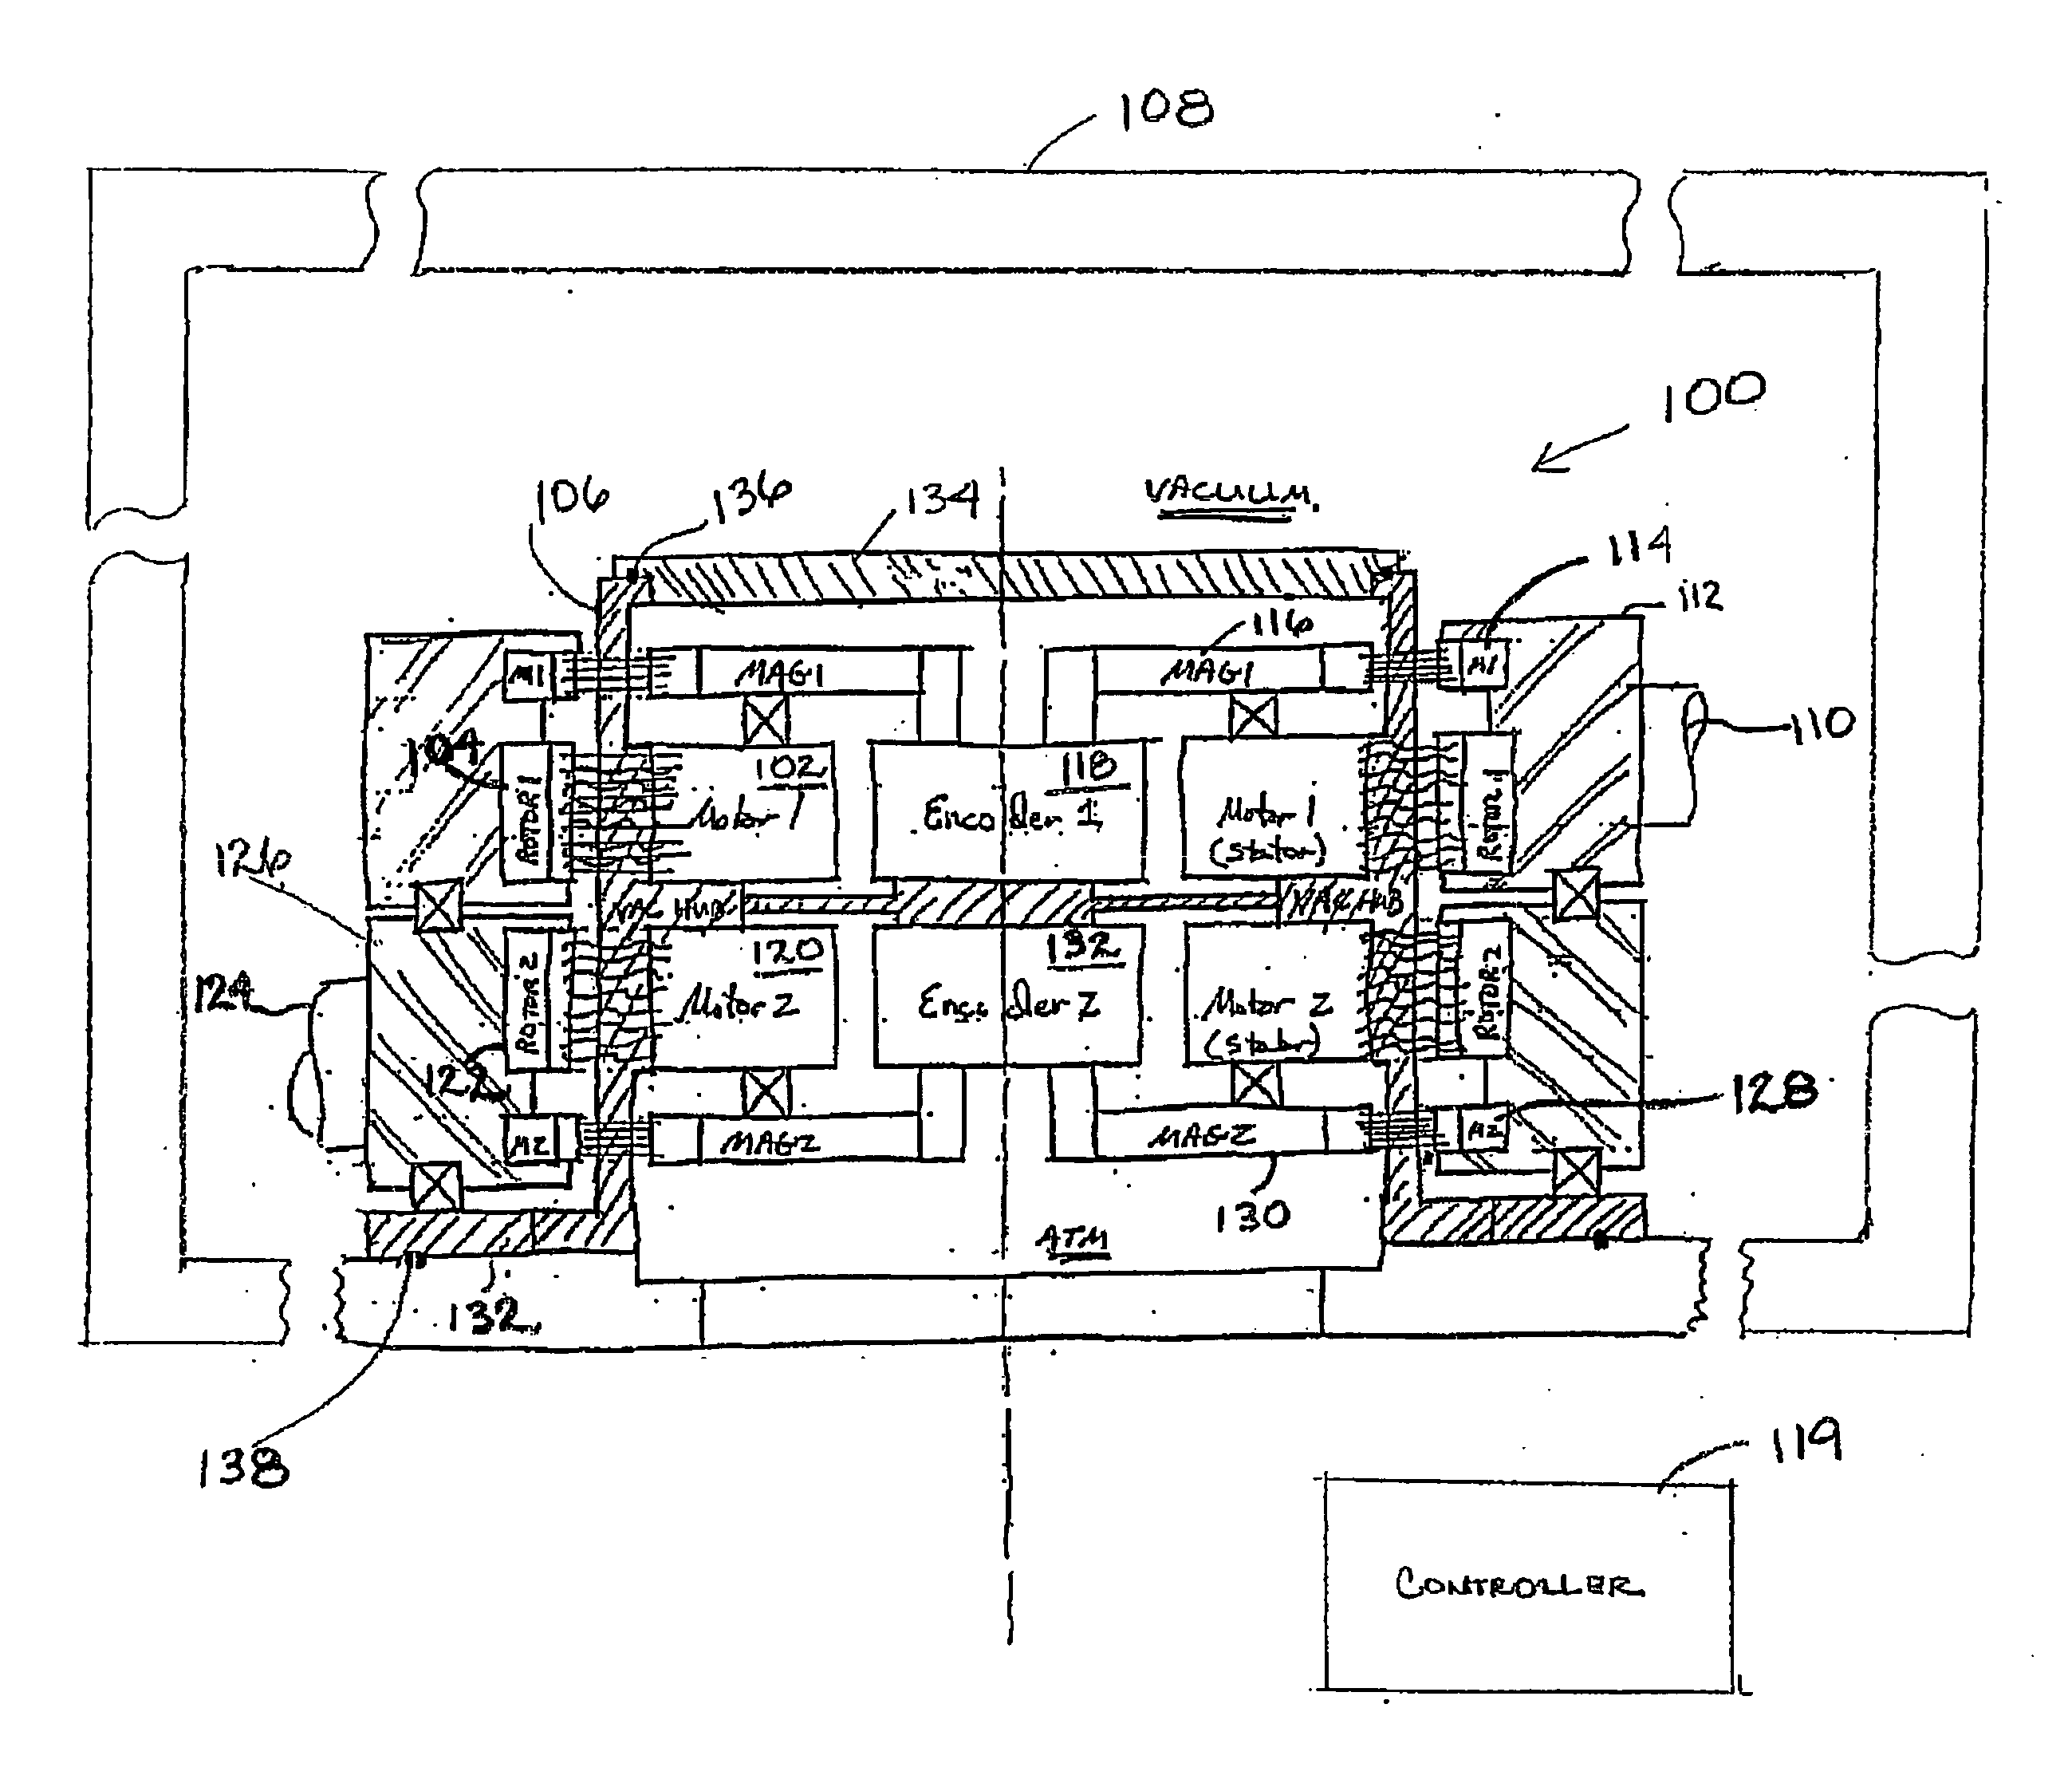 Multi-axis vacuum motor assembly